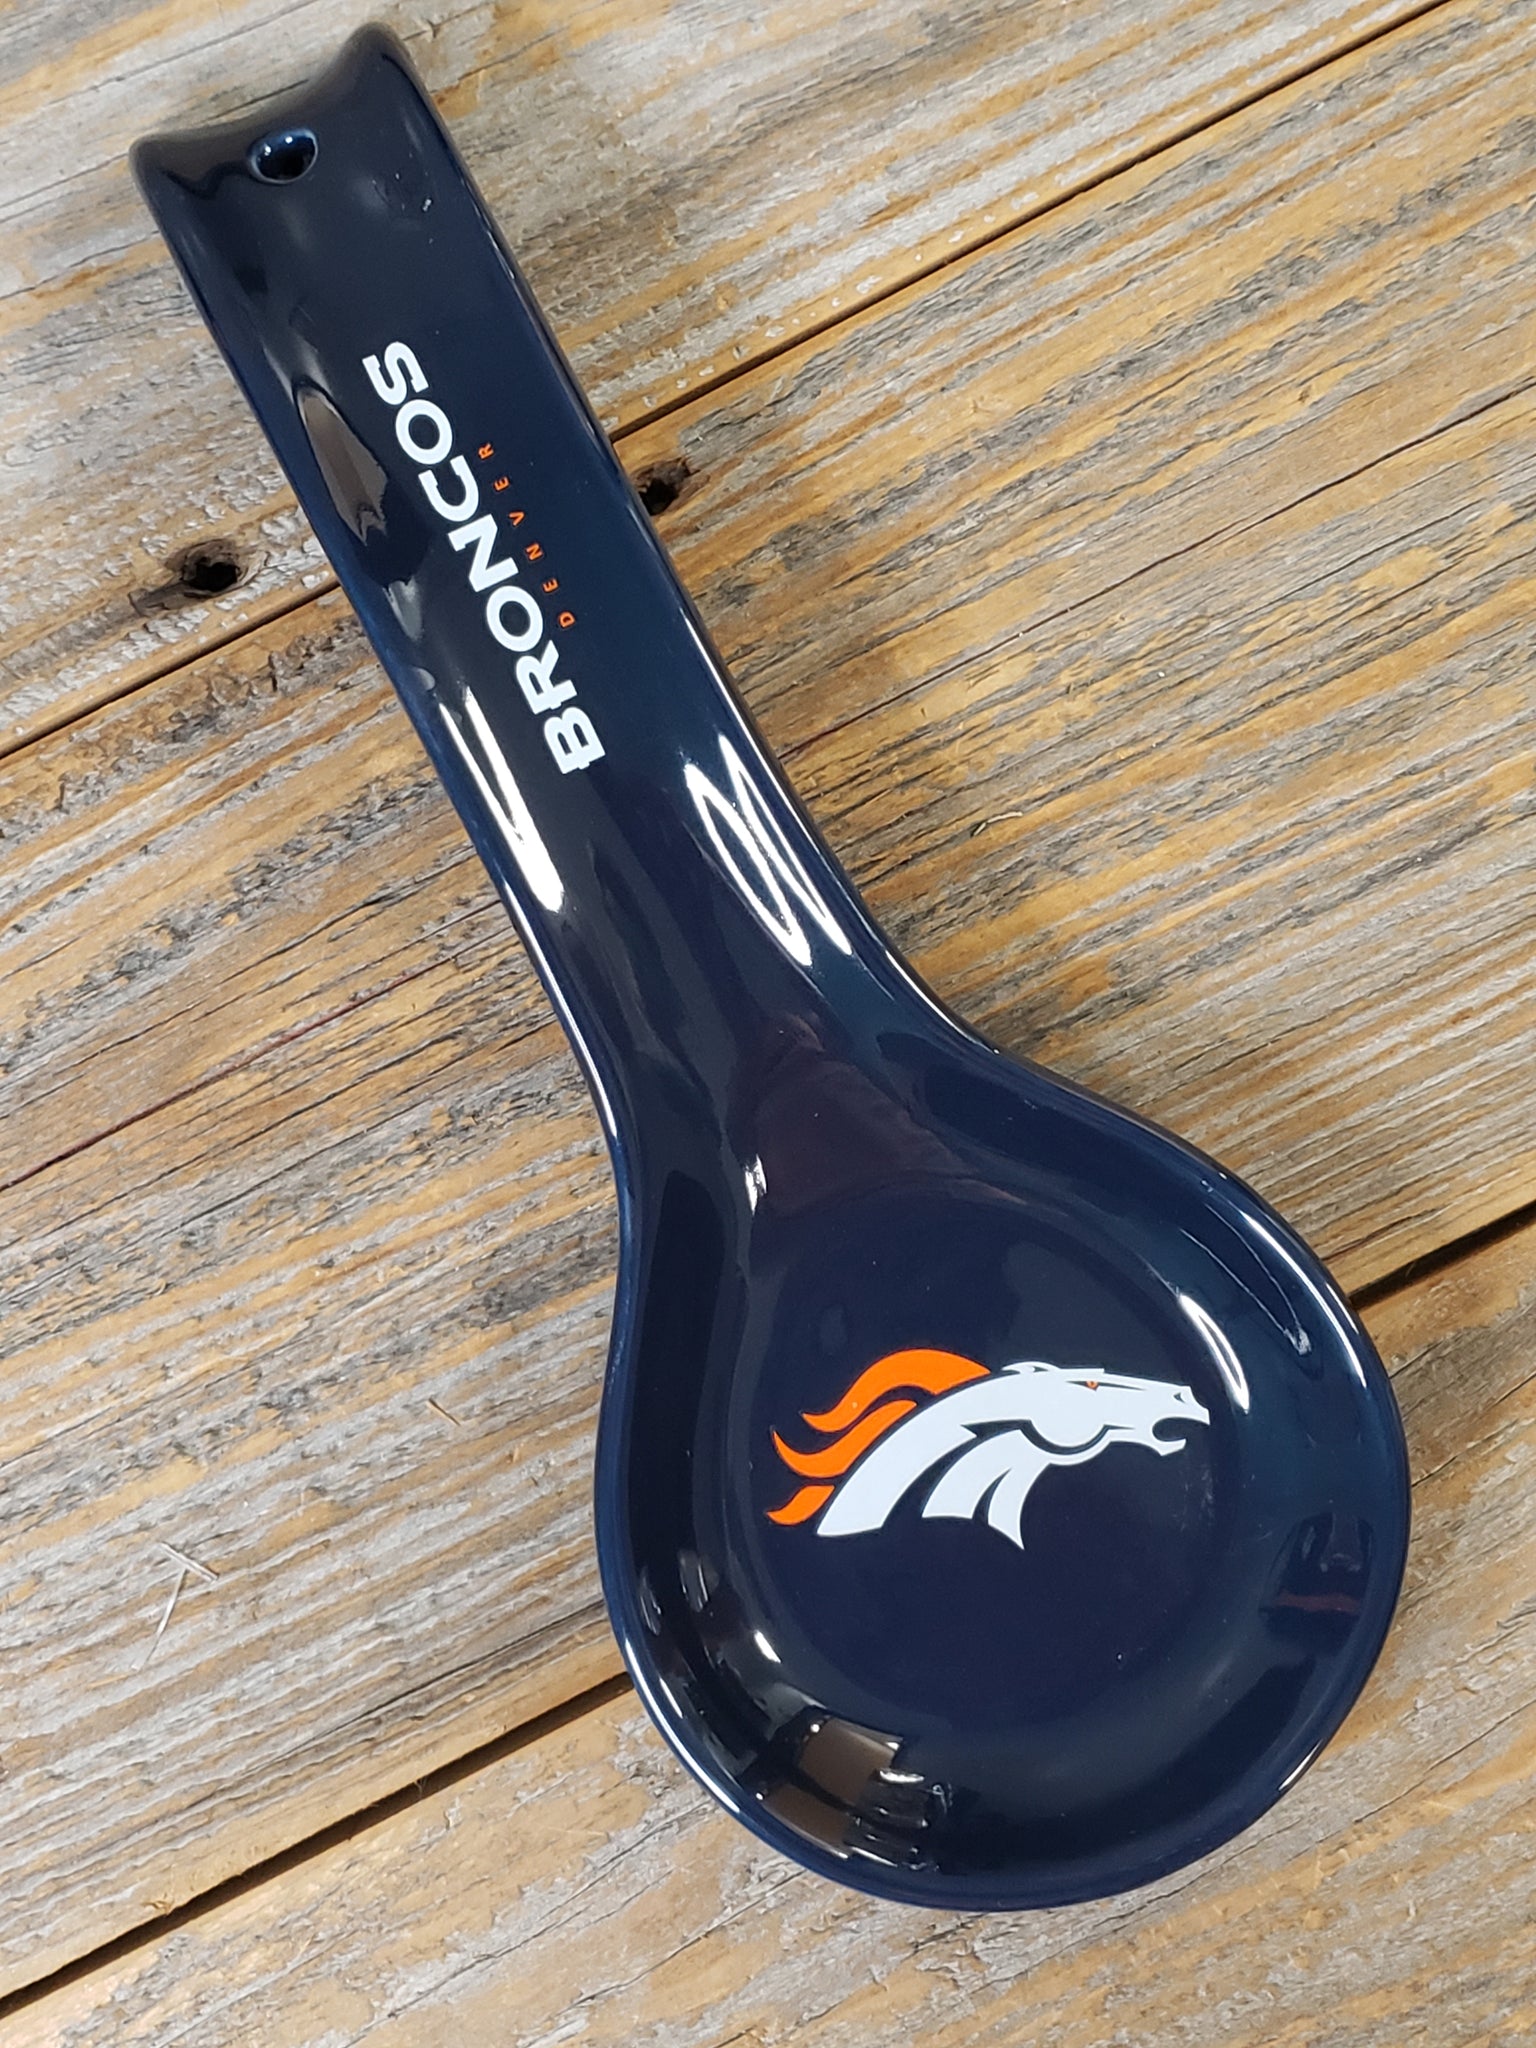 Denver Broncos Ceramic Spoon Rest